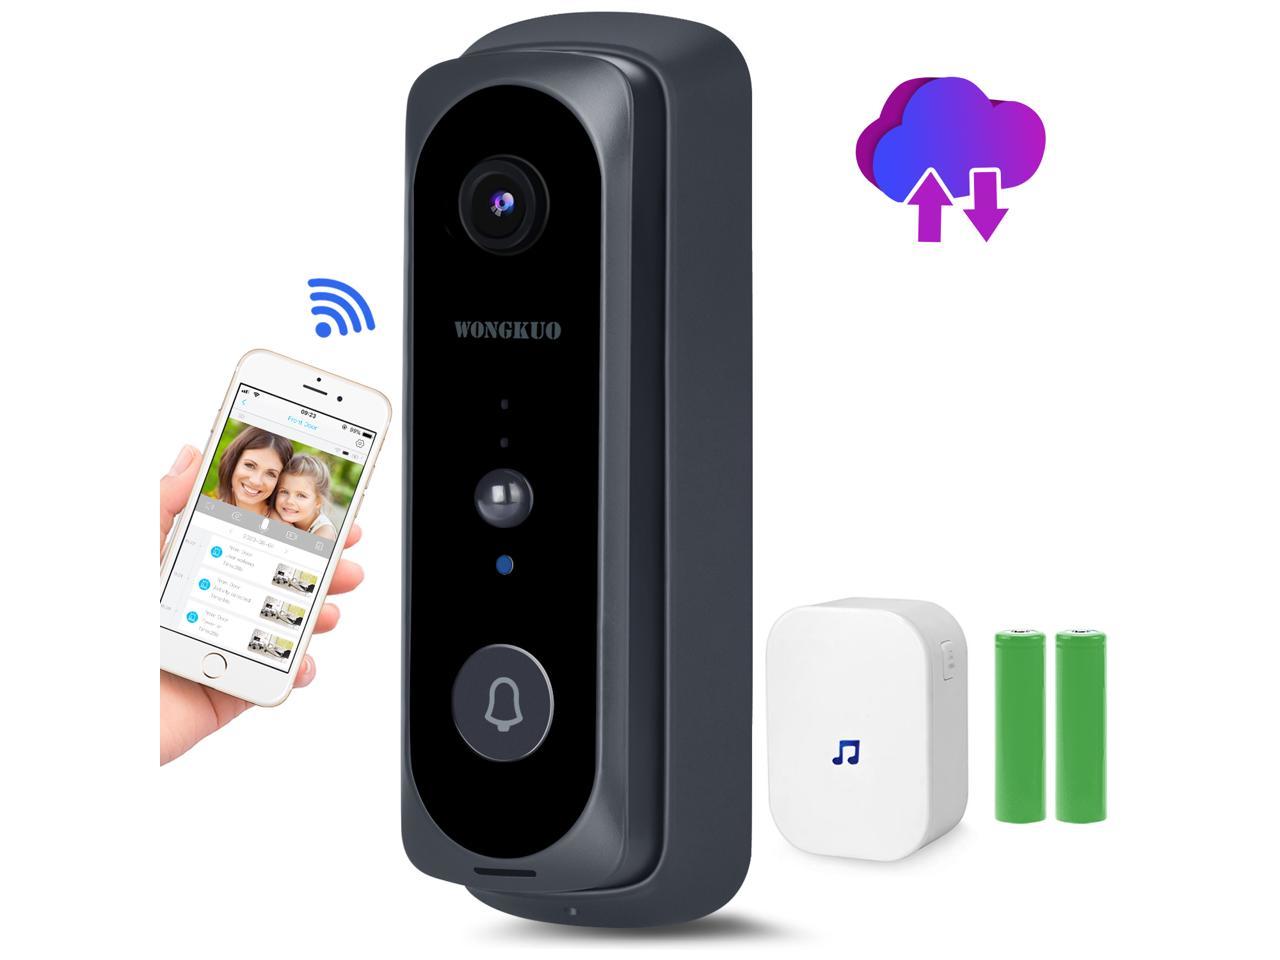 WiFi Smart Security Doorbell Black Wireless Video Doorbell Read Data On Phone,1080P IR Night Vision Camera